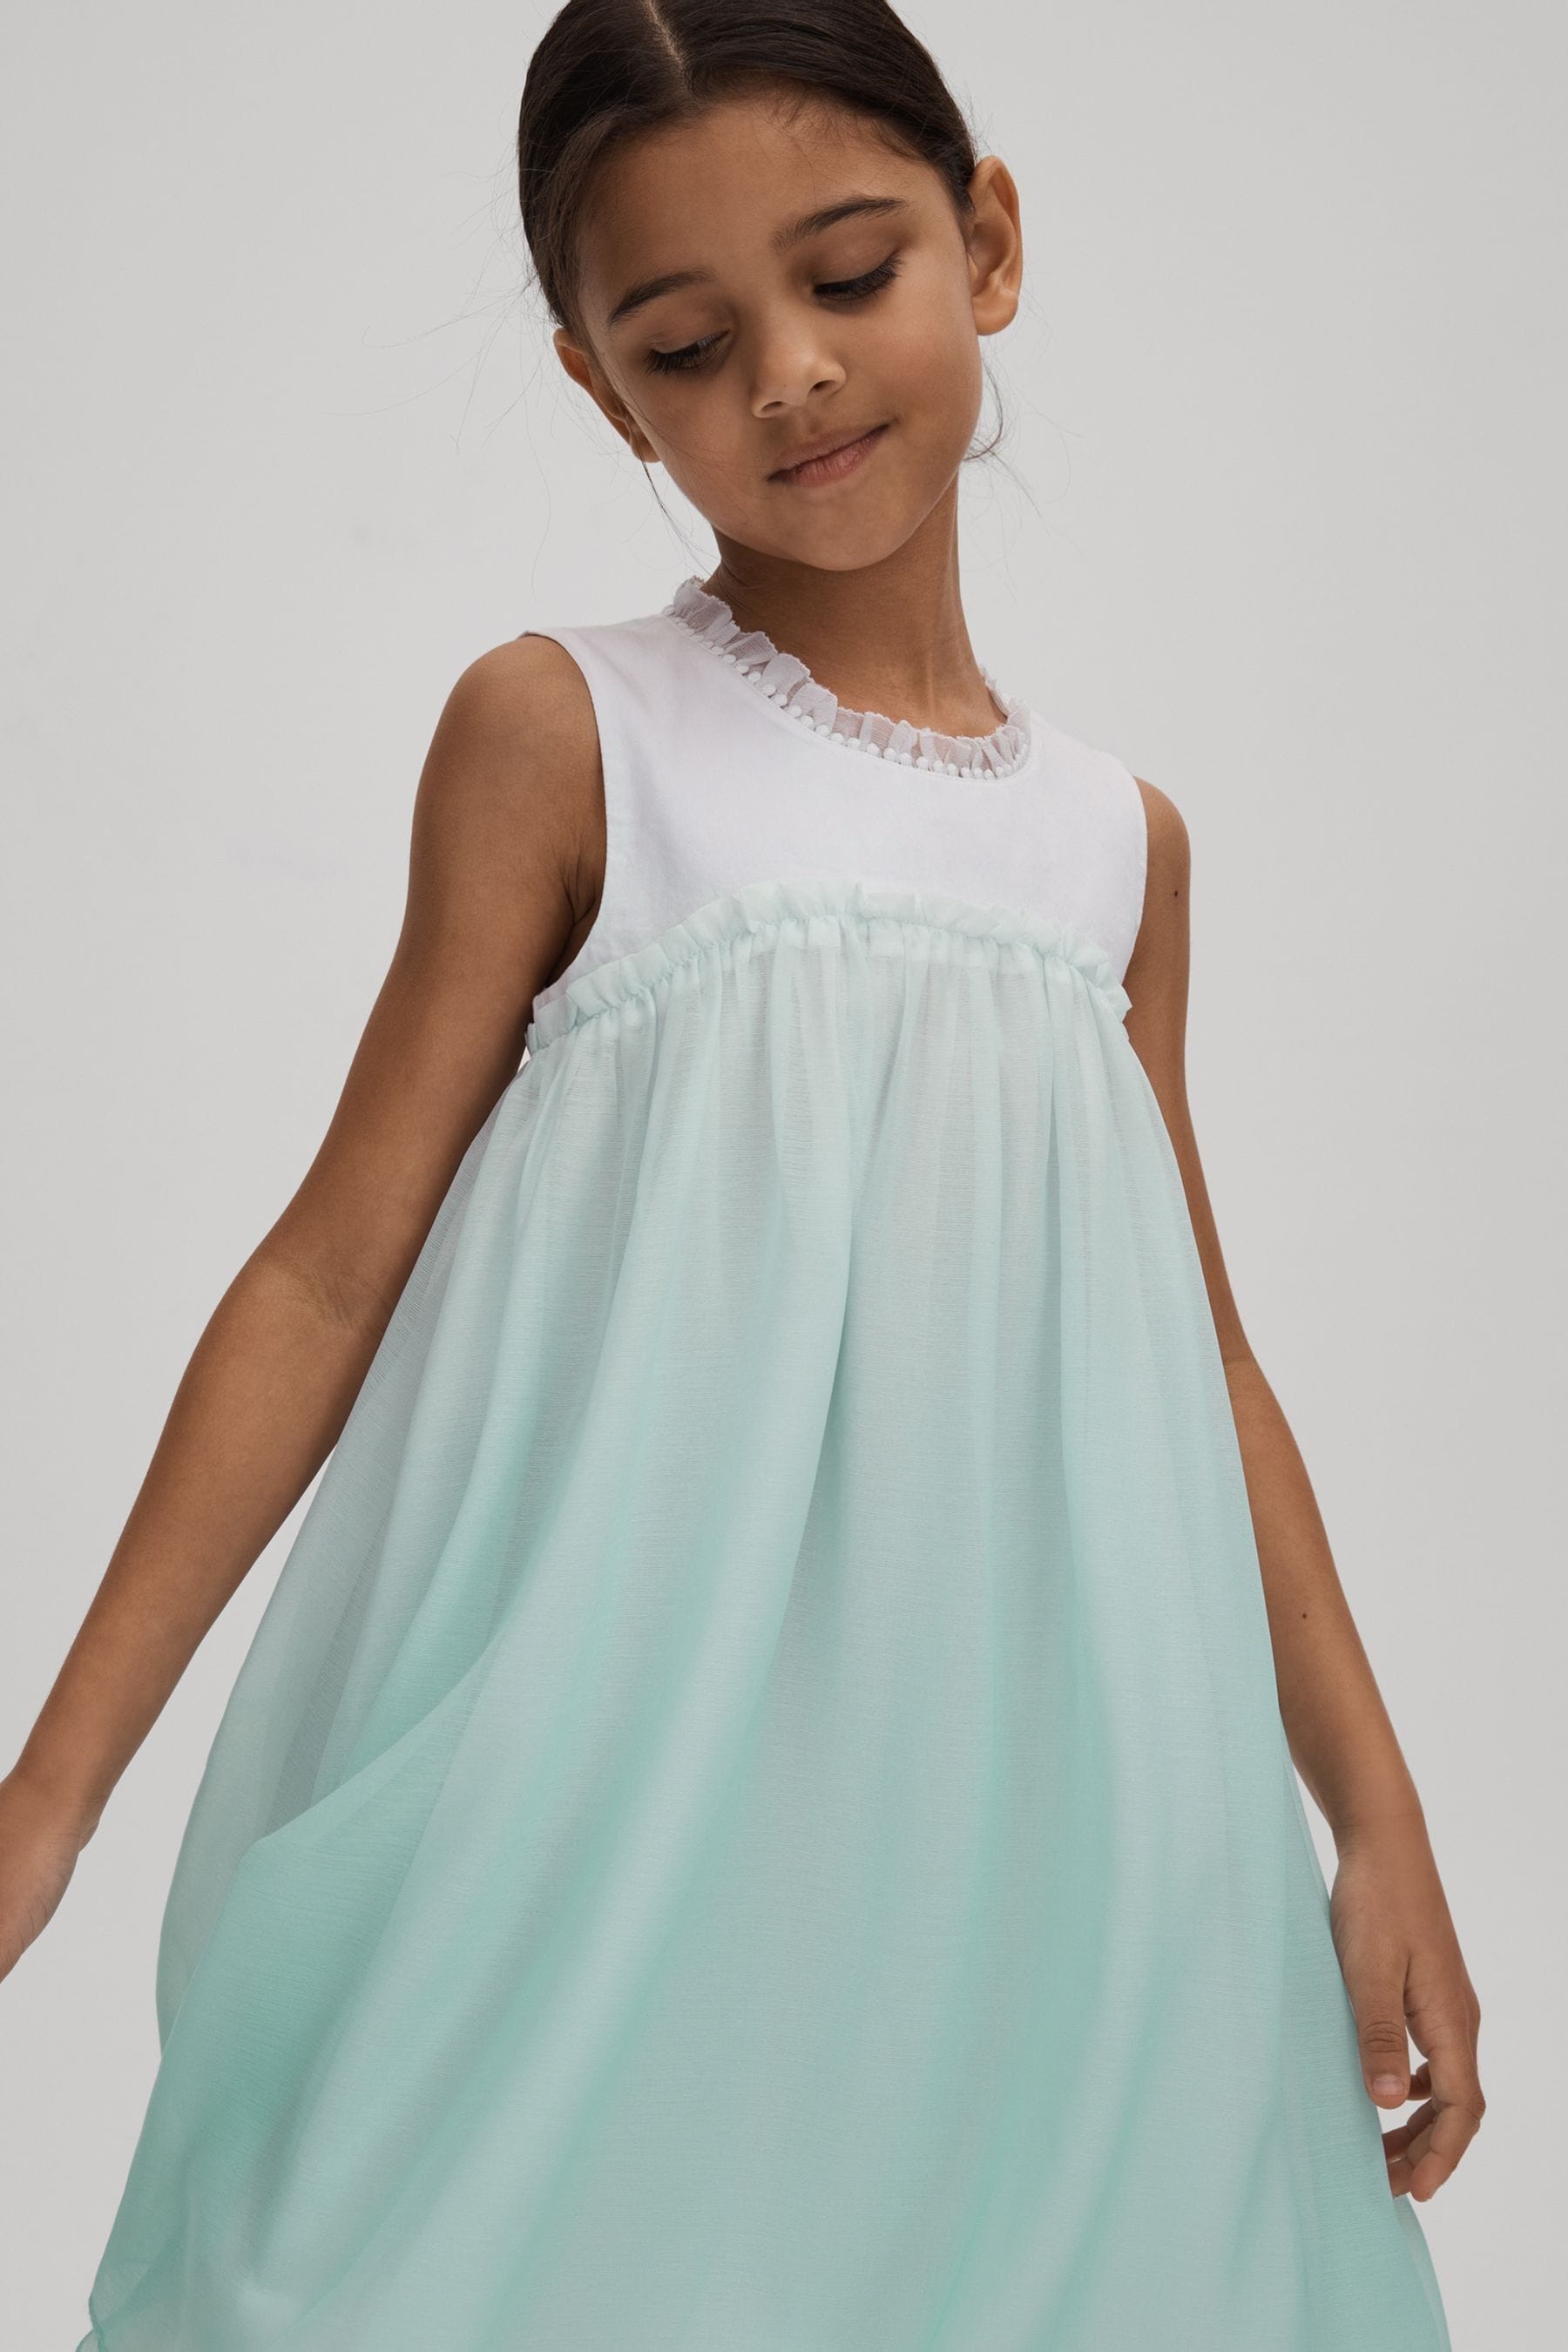 Reiss Kids' Coco - Blue Senior Ombre Tulle Dress, 9